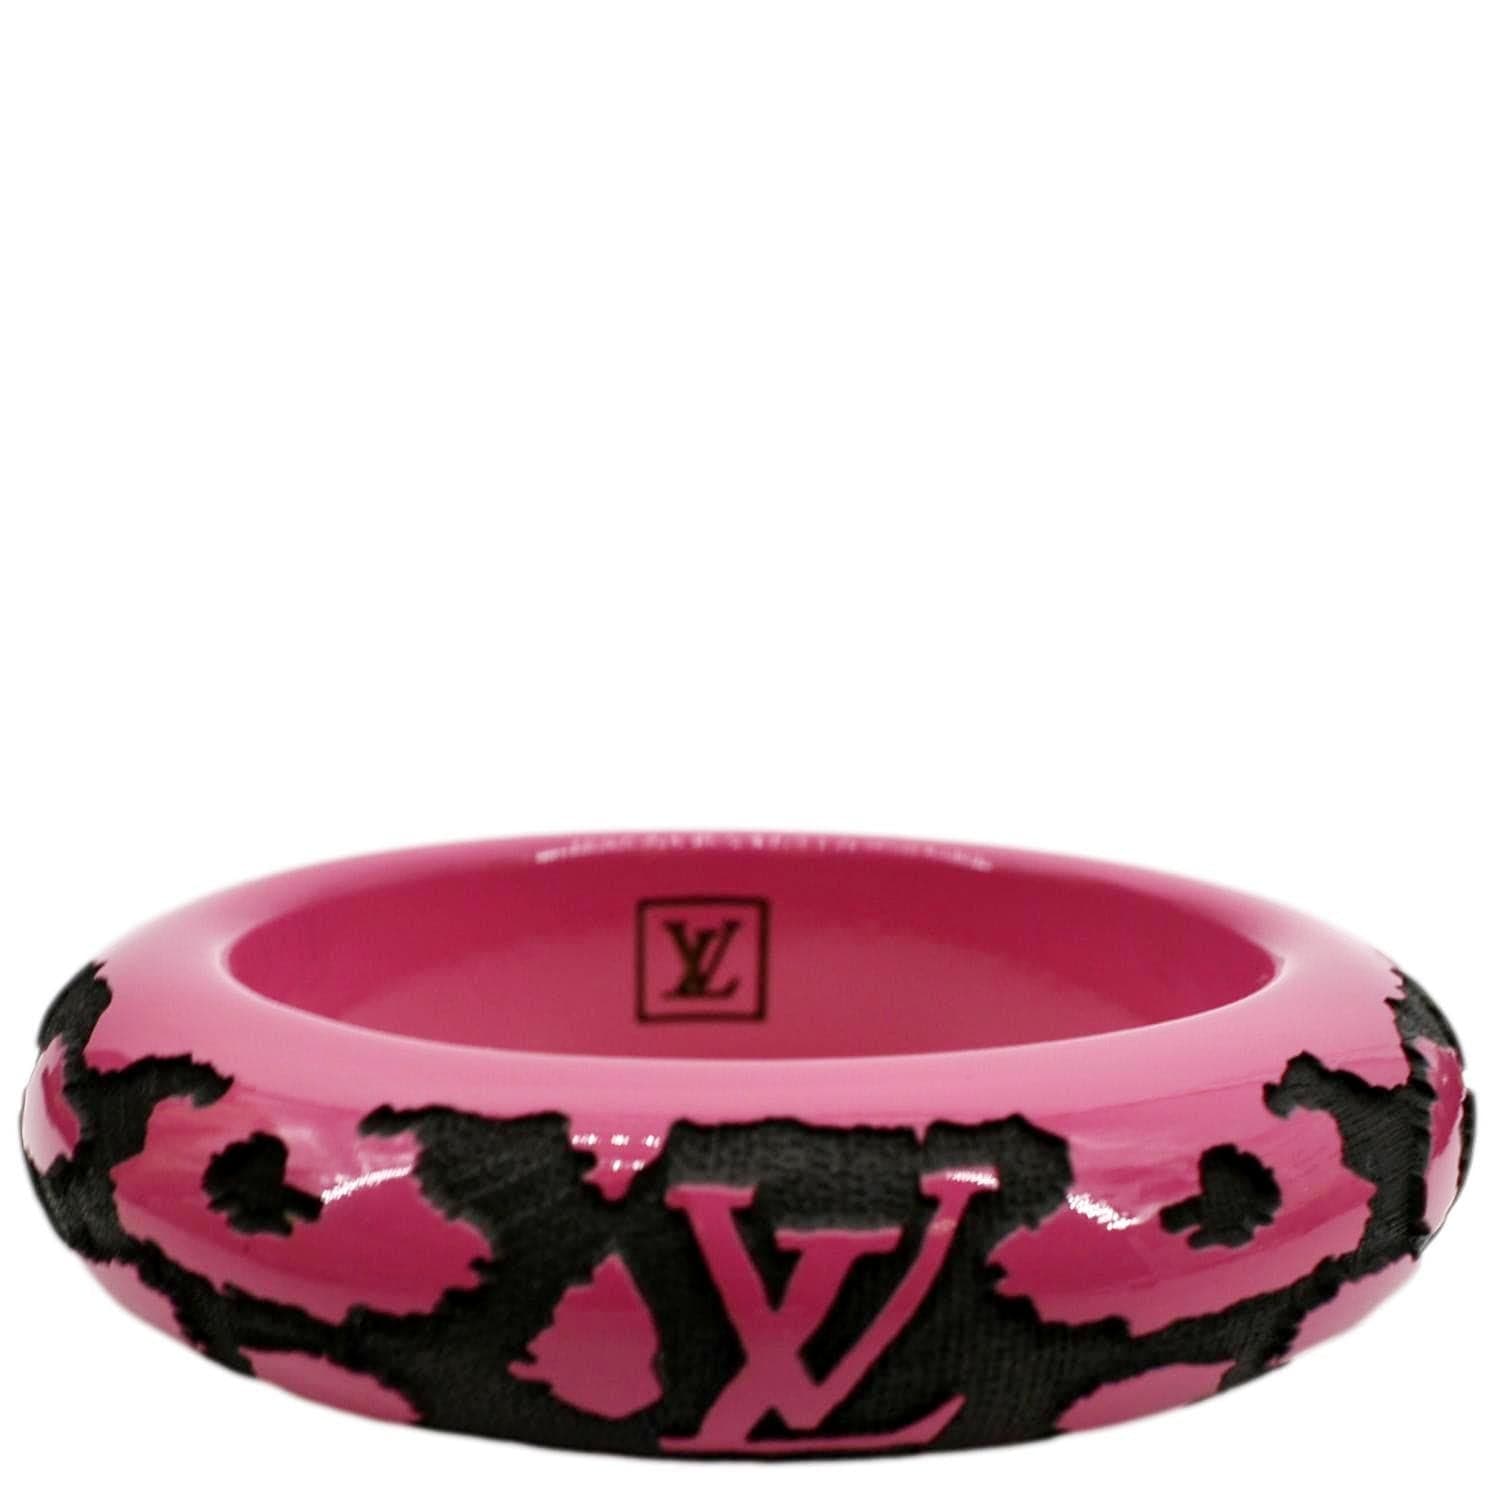 Louis Vuitton Monogram Bangle Bracelet